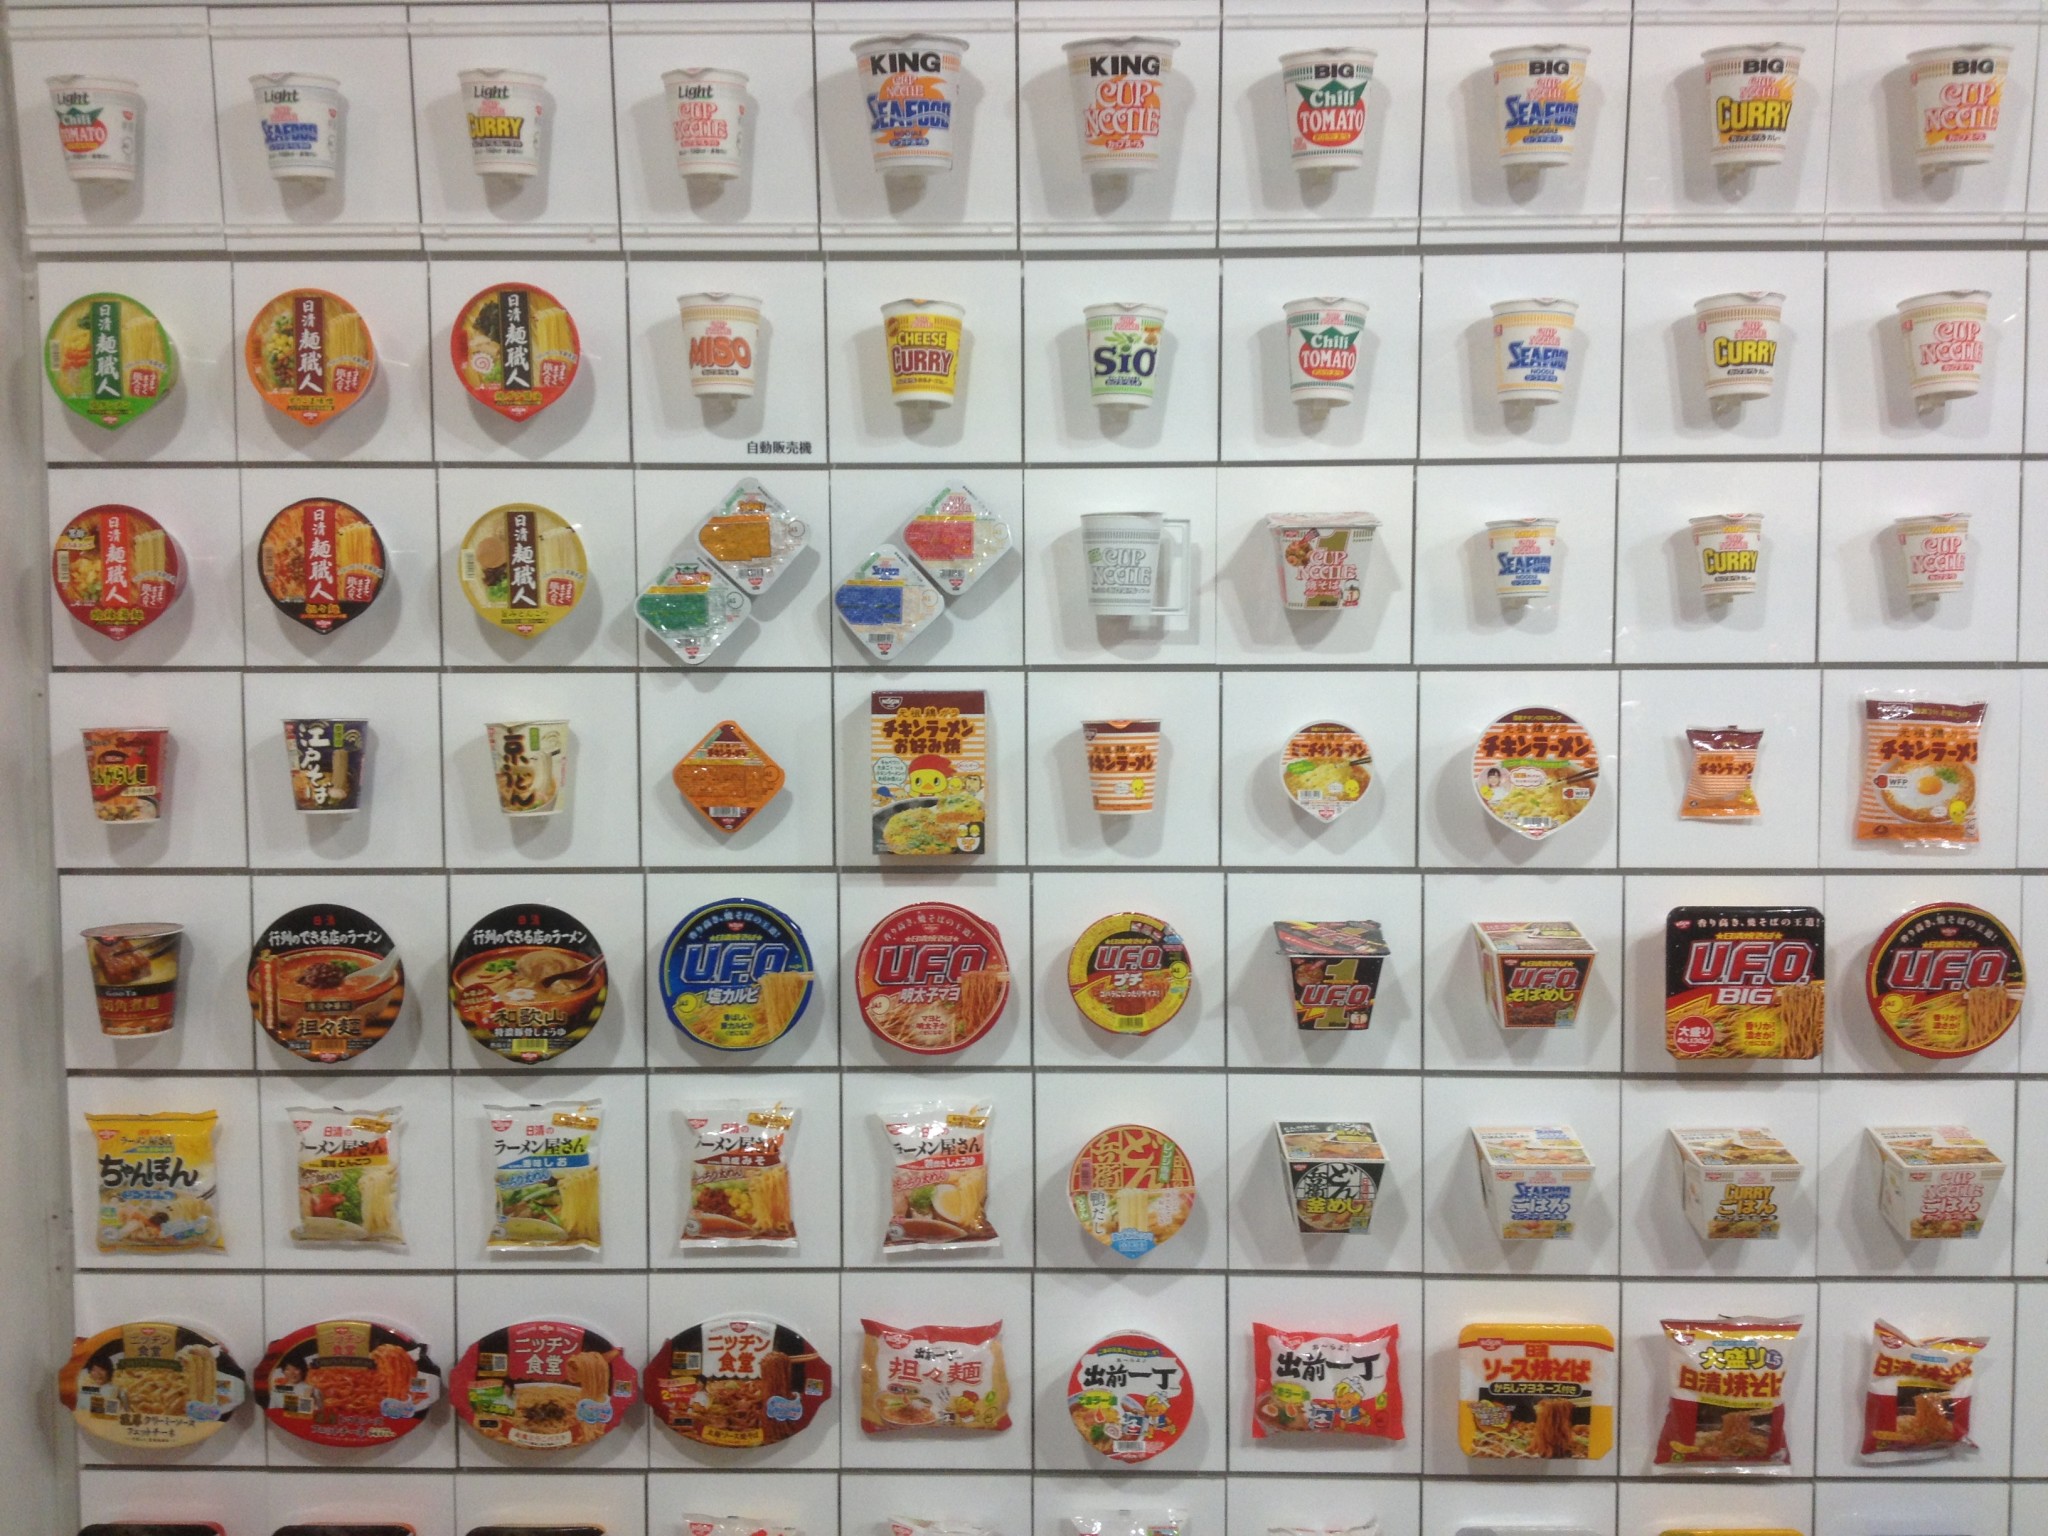 Cup Noodles Museum in Yokohama